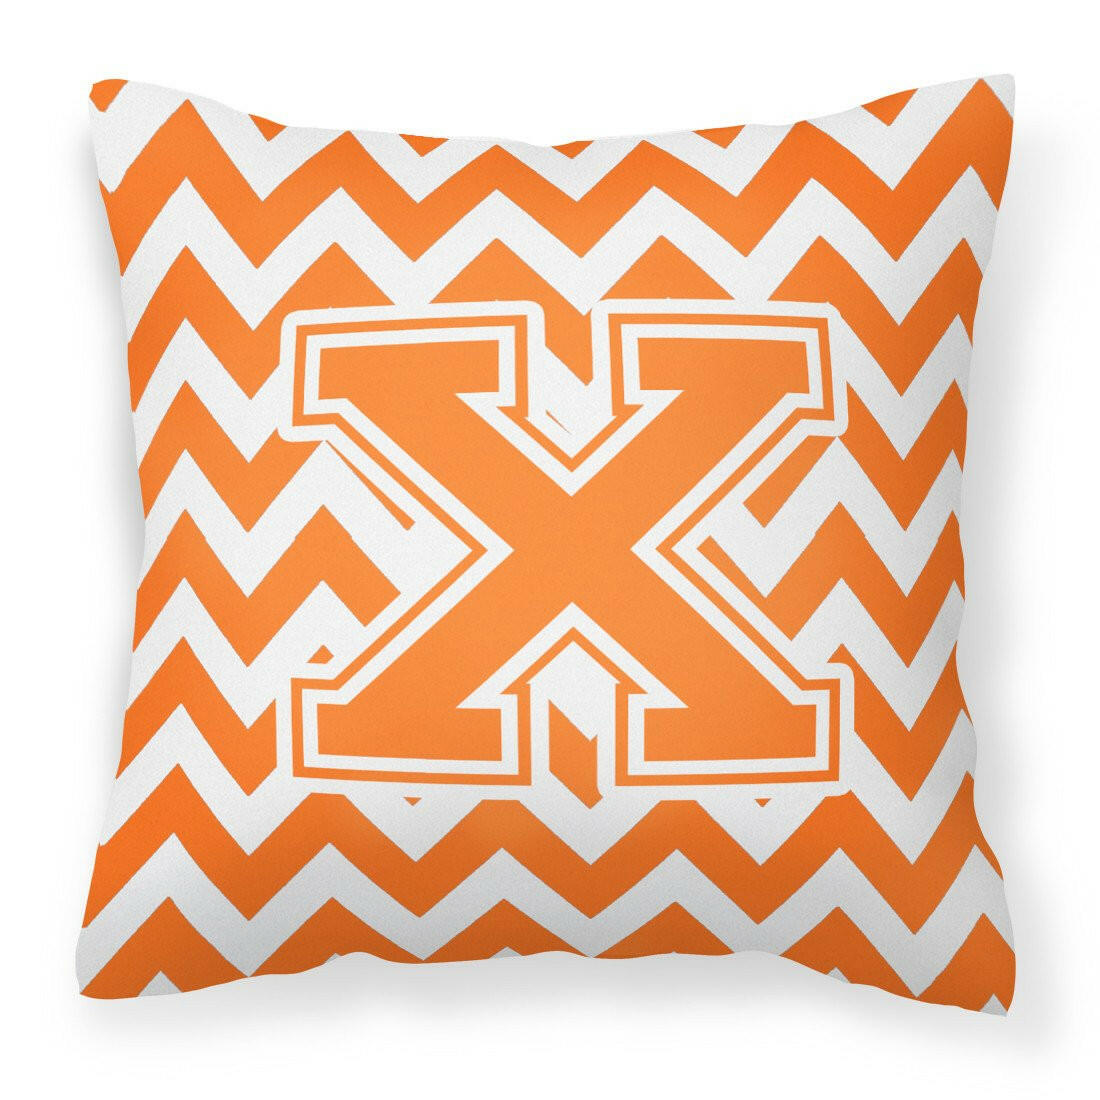 Letter X Chevron Orange and White Fabric Decorative Pillow CJ1046-XPW1414 by Caroline's Treasures